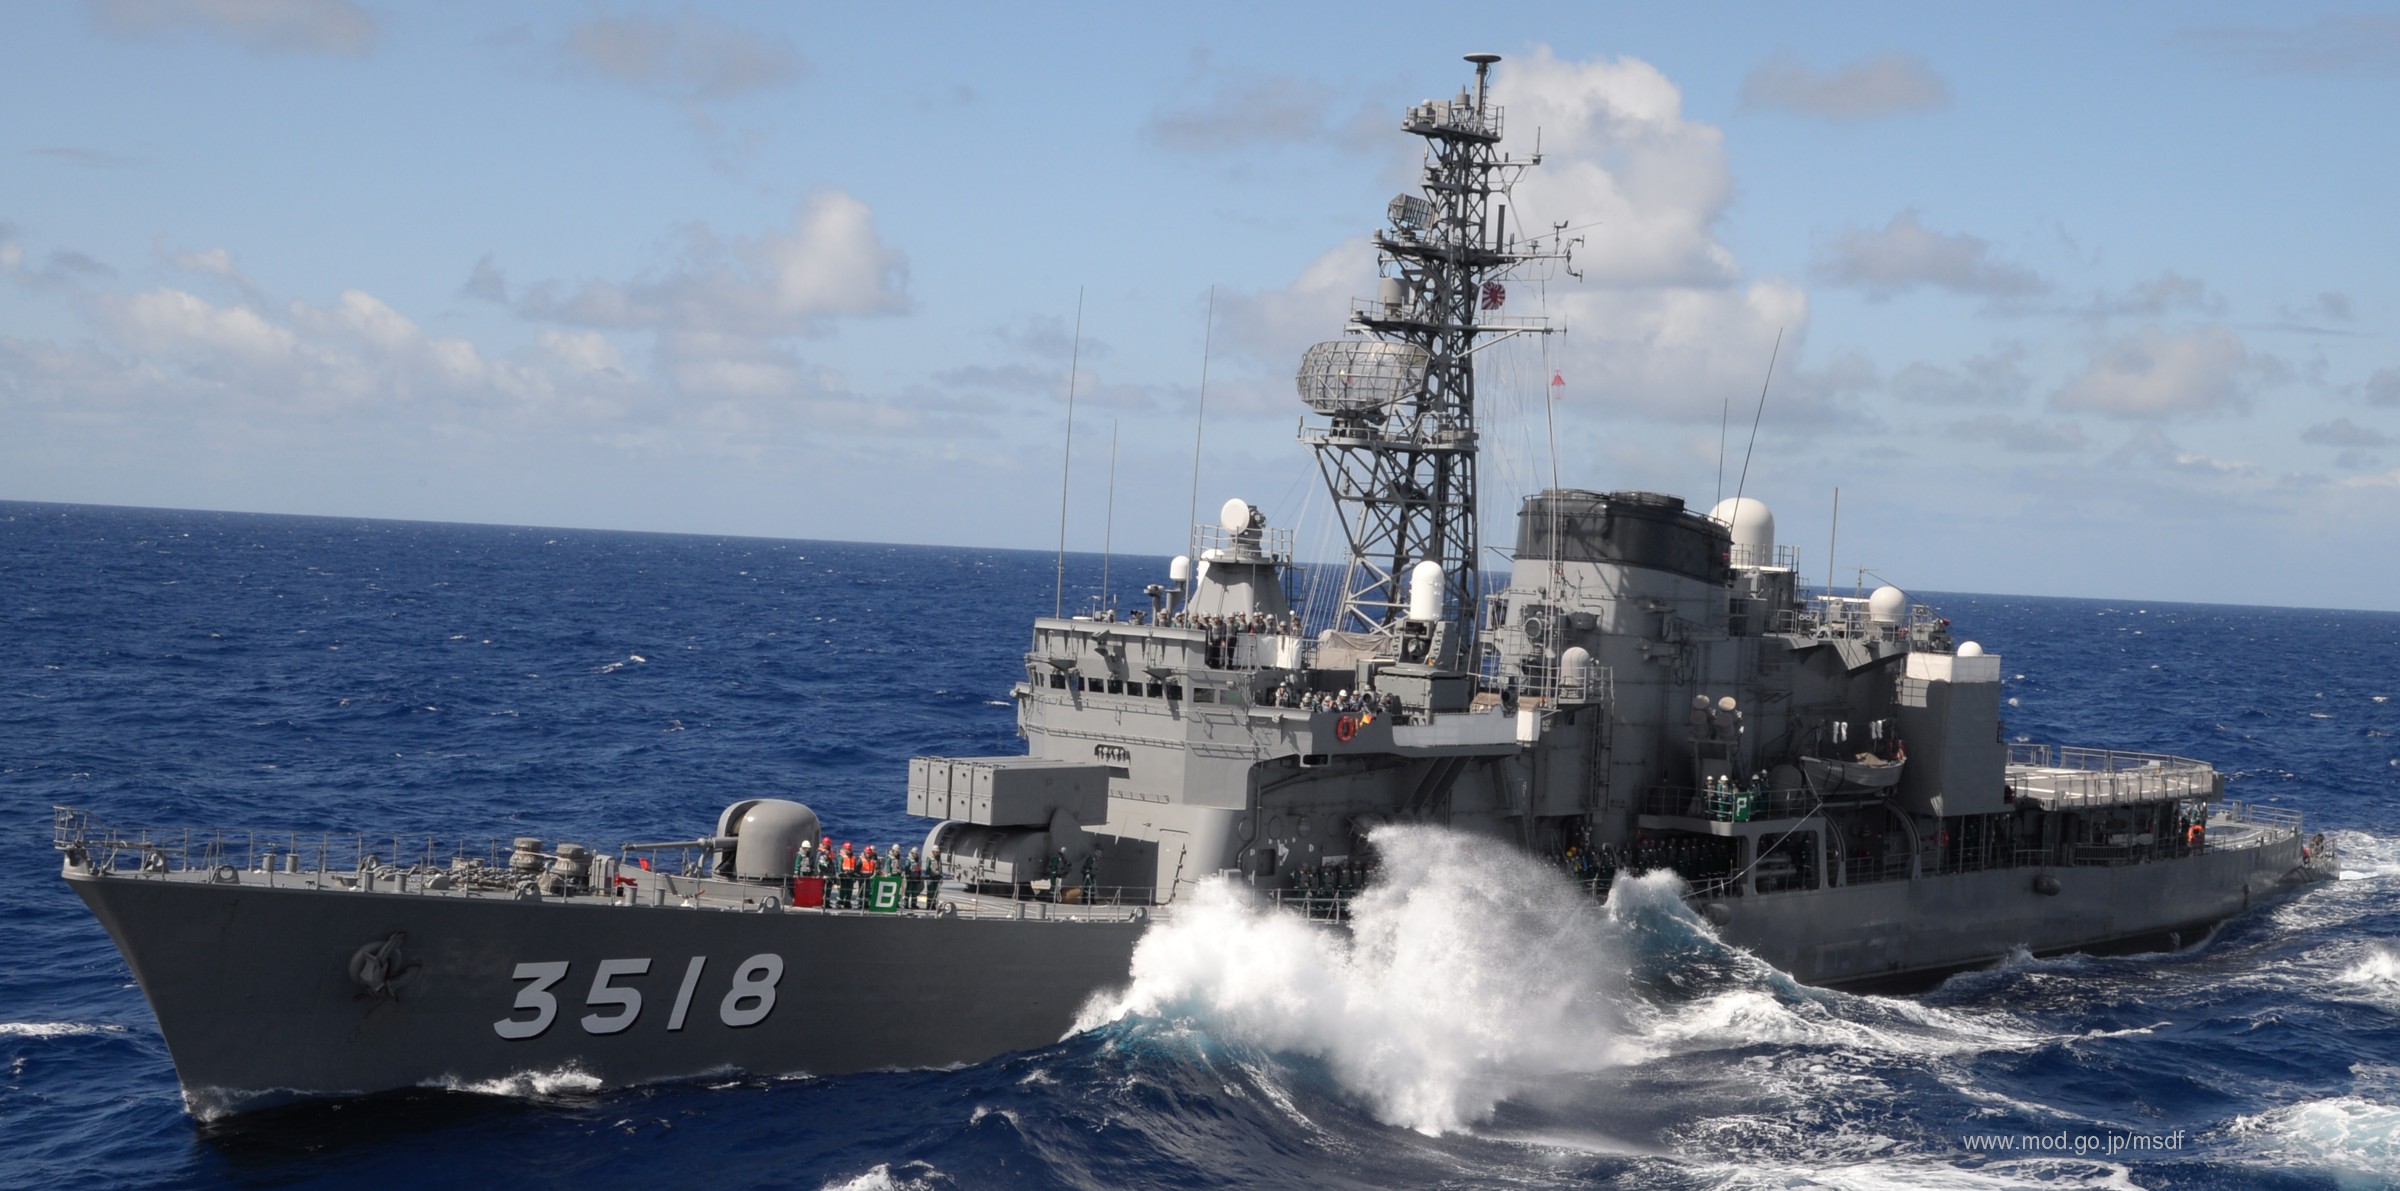 dd-131 tv-3518 jds setoyuki hatsuyuki class destroyer japan maritime self defense force jmsdf 02